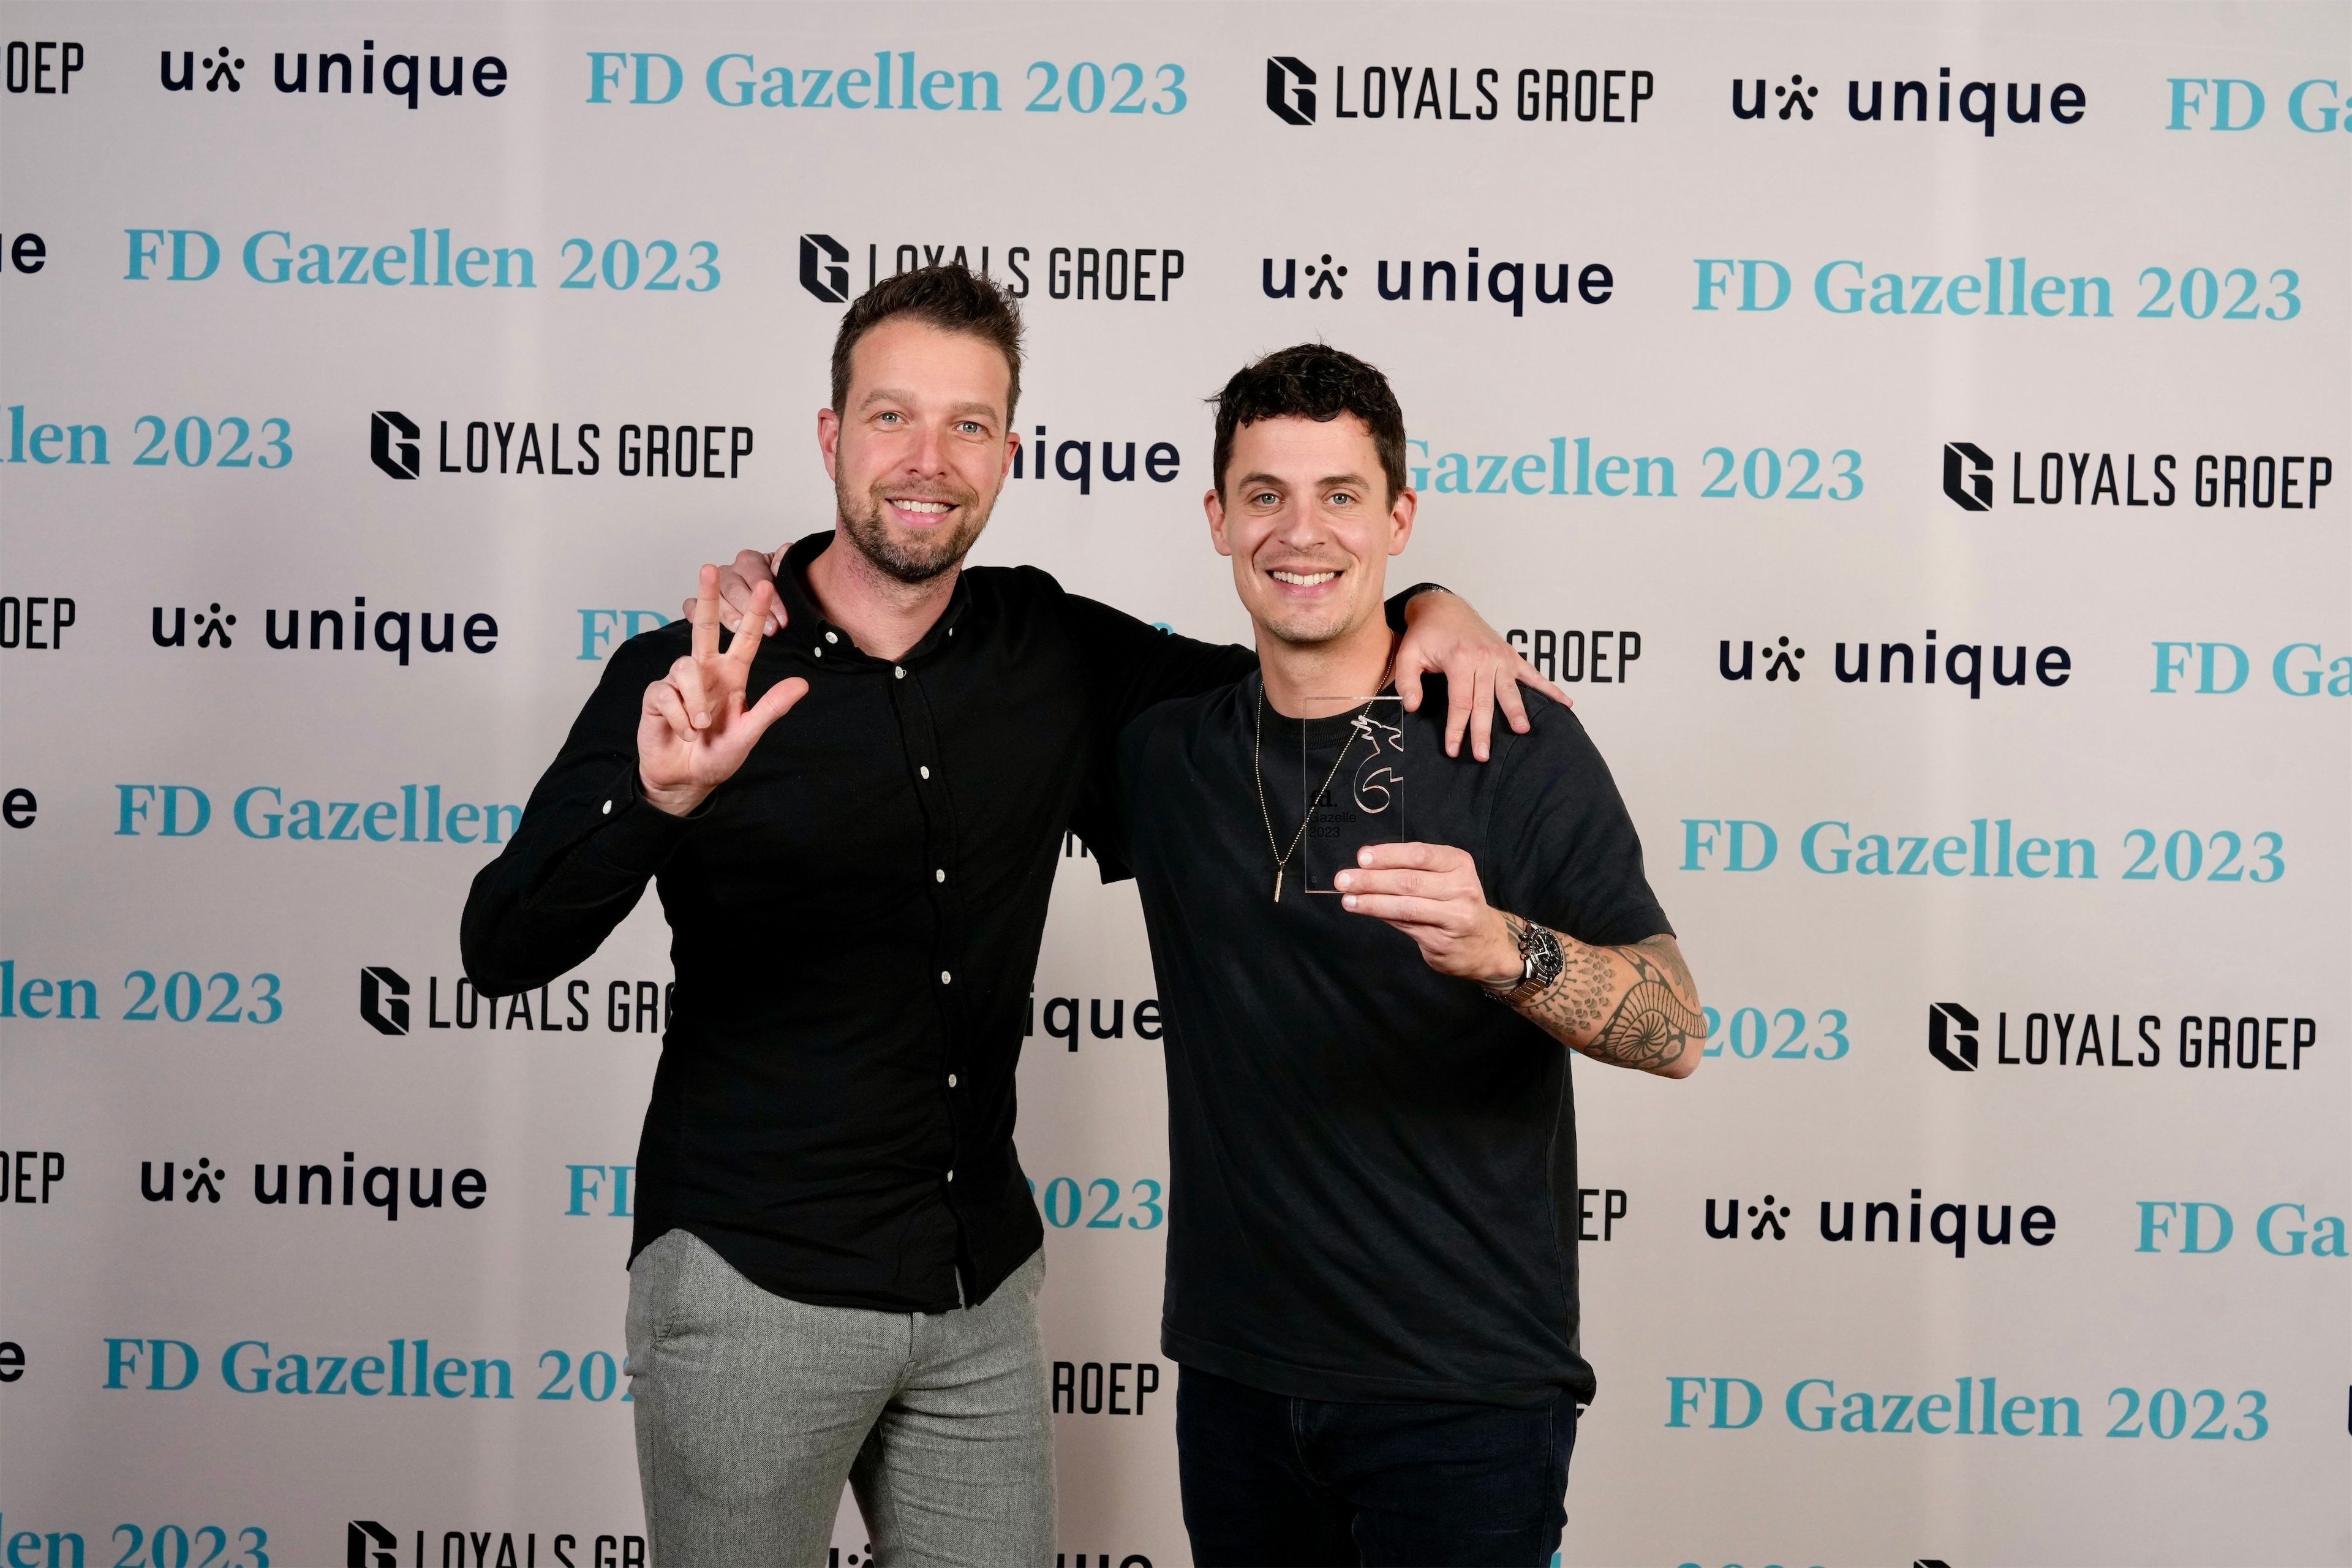 Photo of founders Maarten and Robbin at the FD Gazellen.